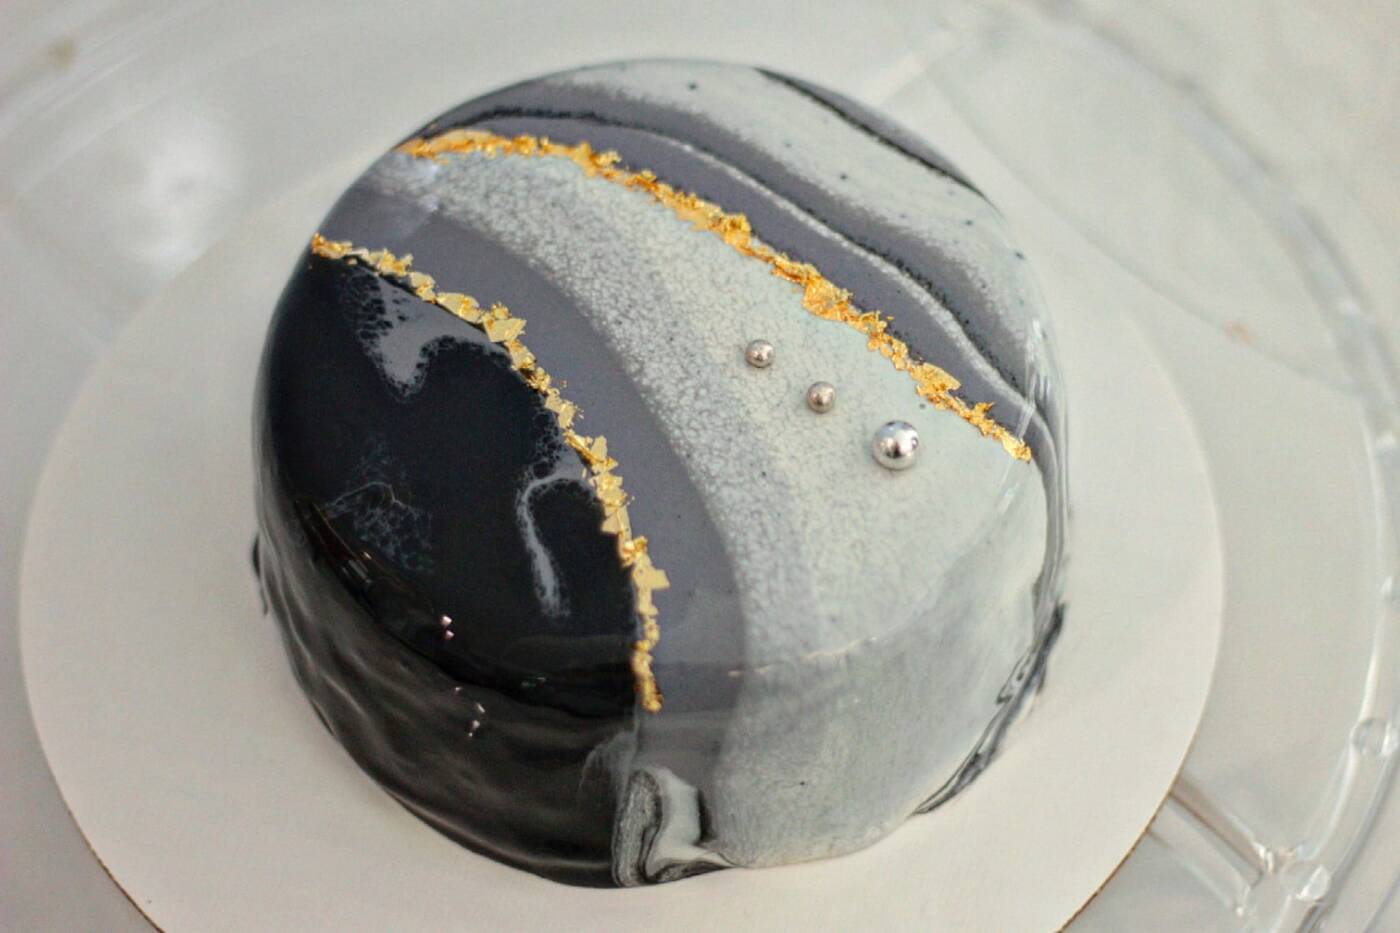 boreal cake